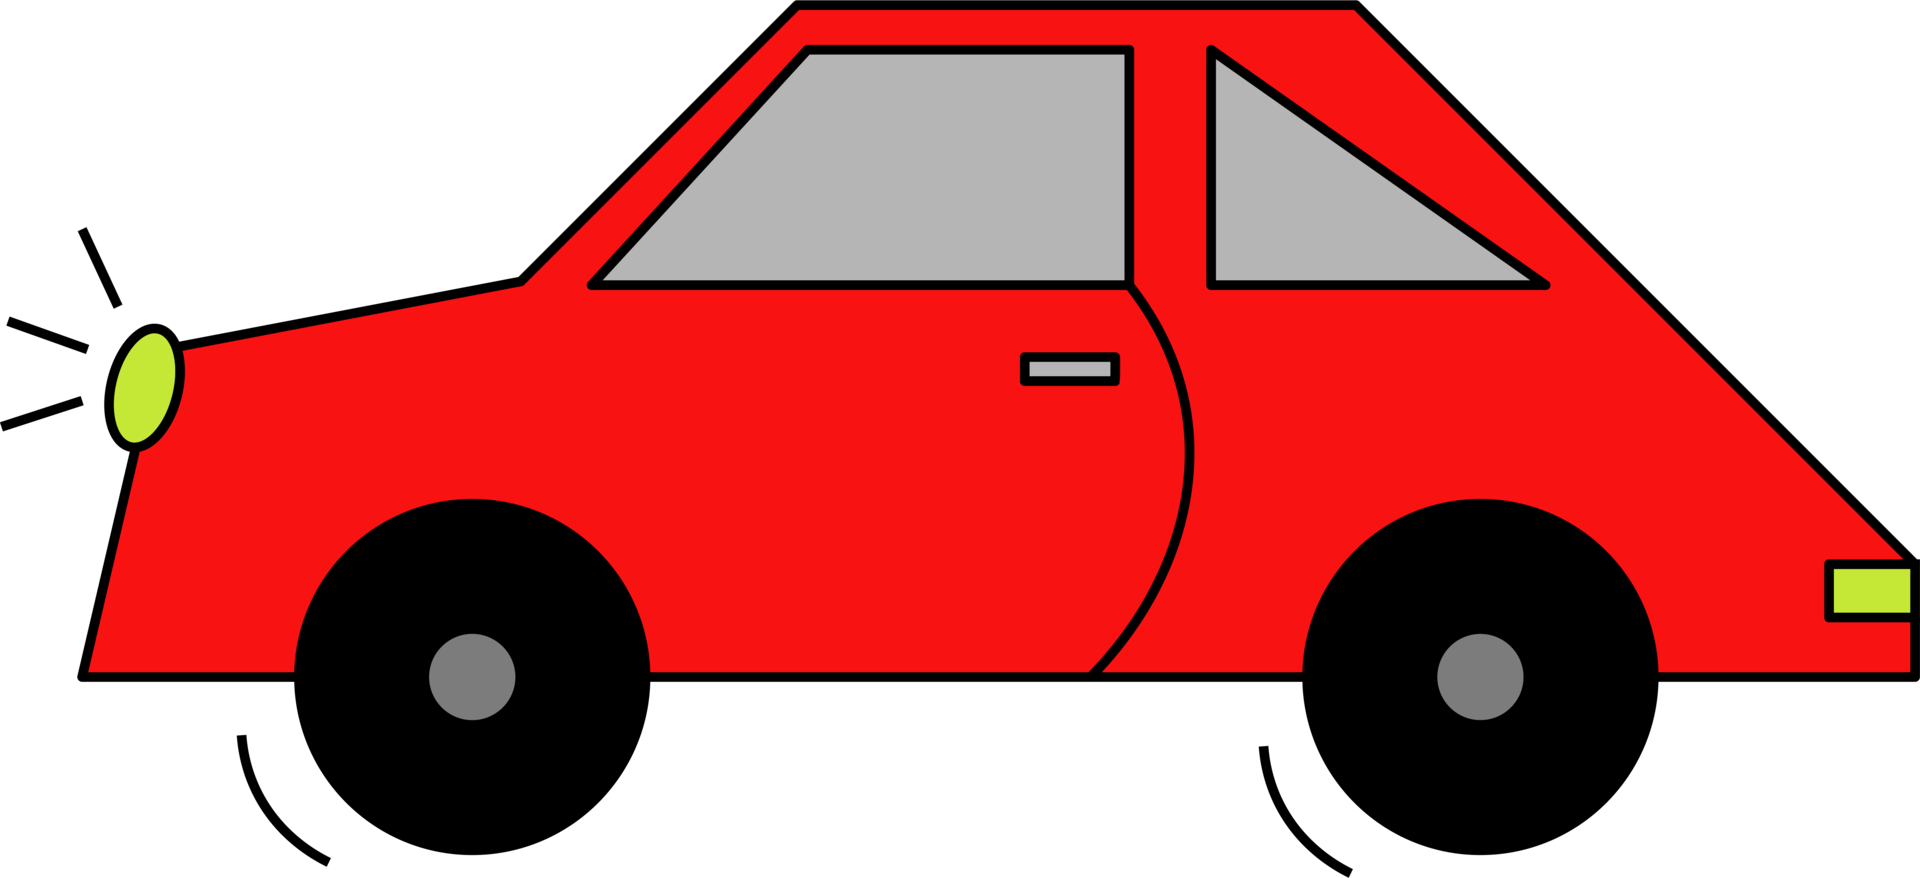 car design illustration isolated on transparent background png